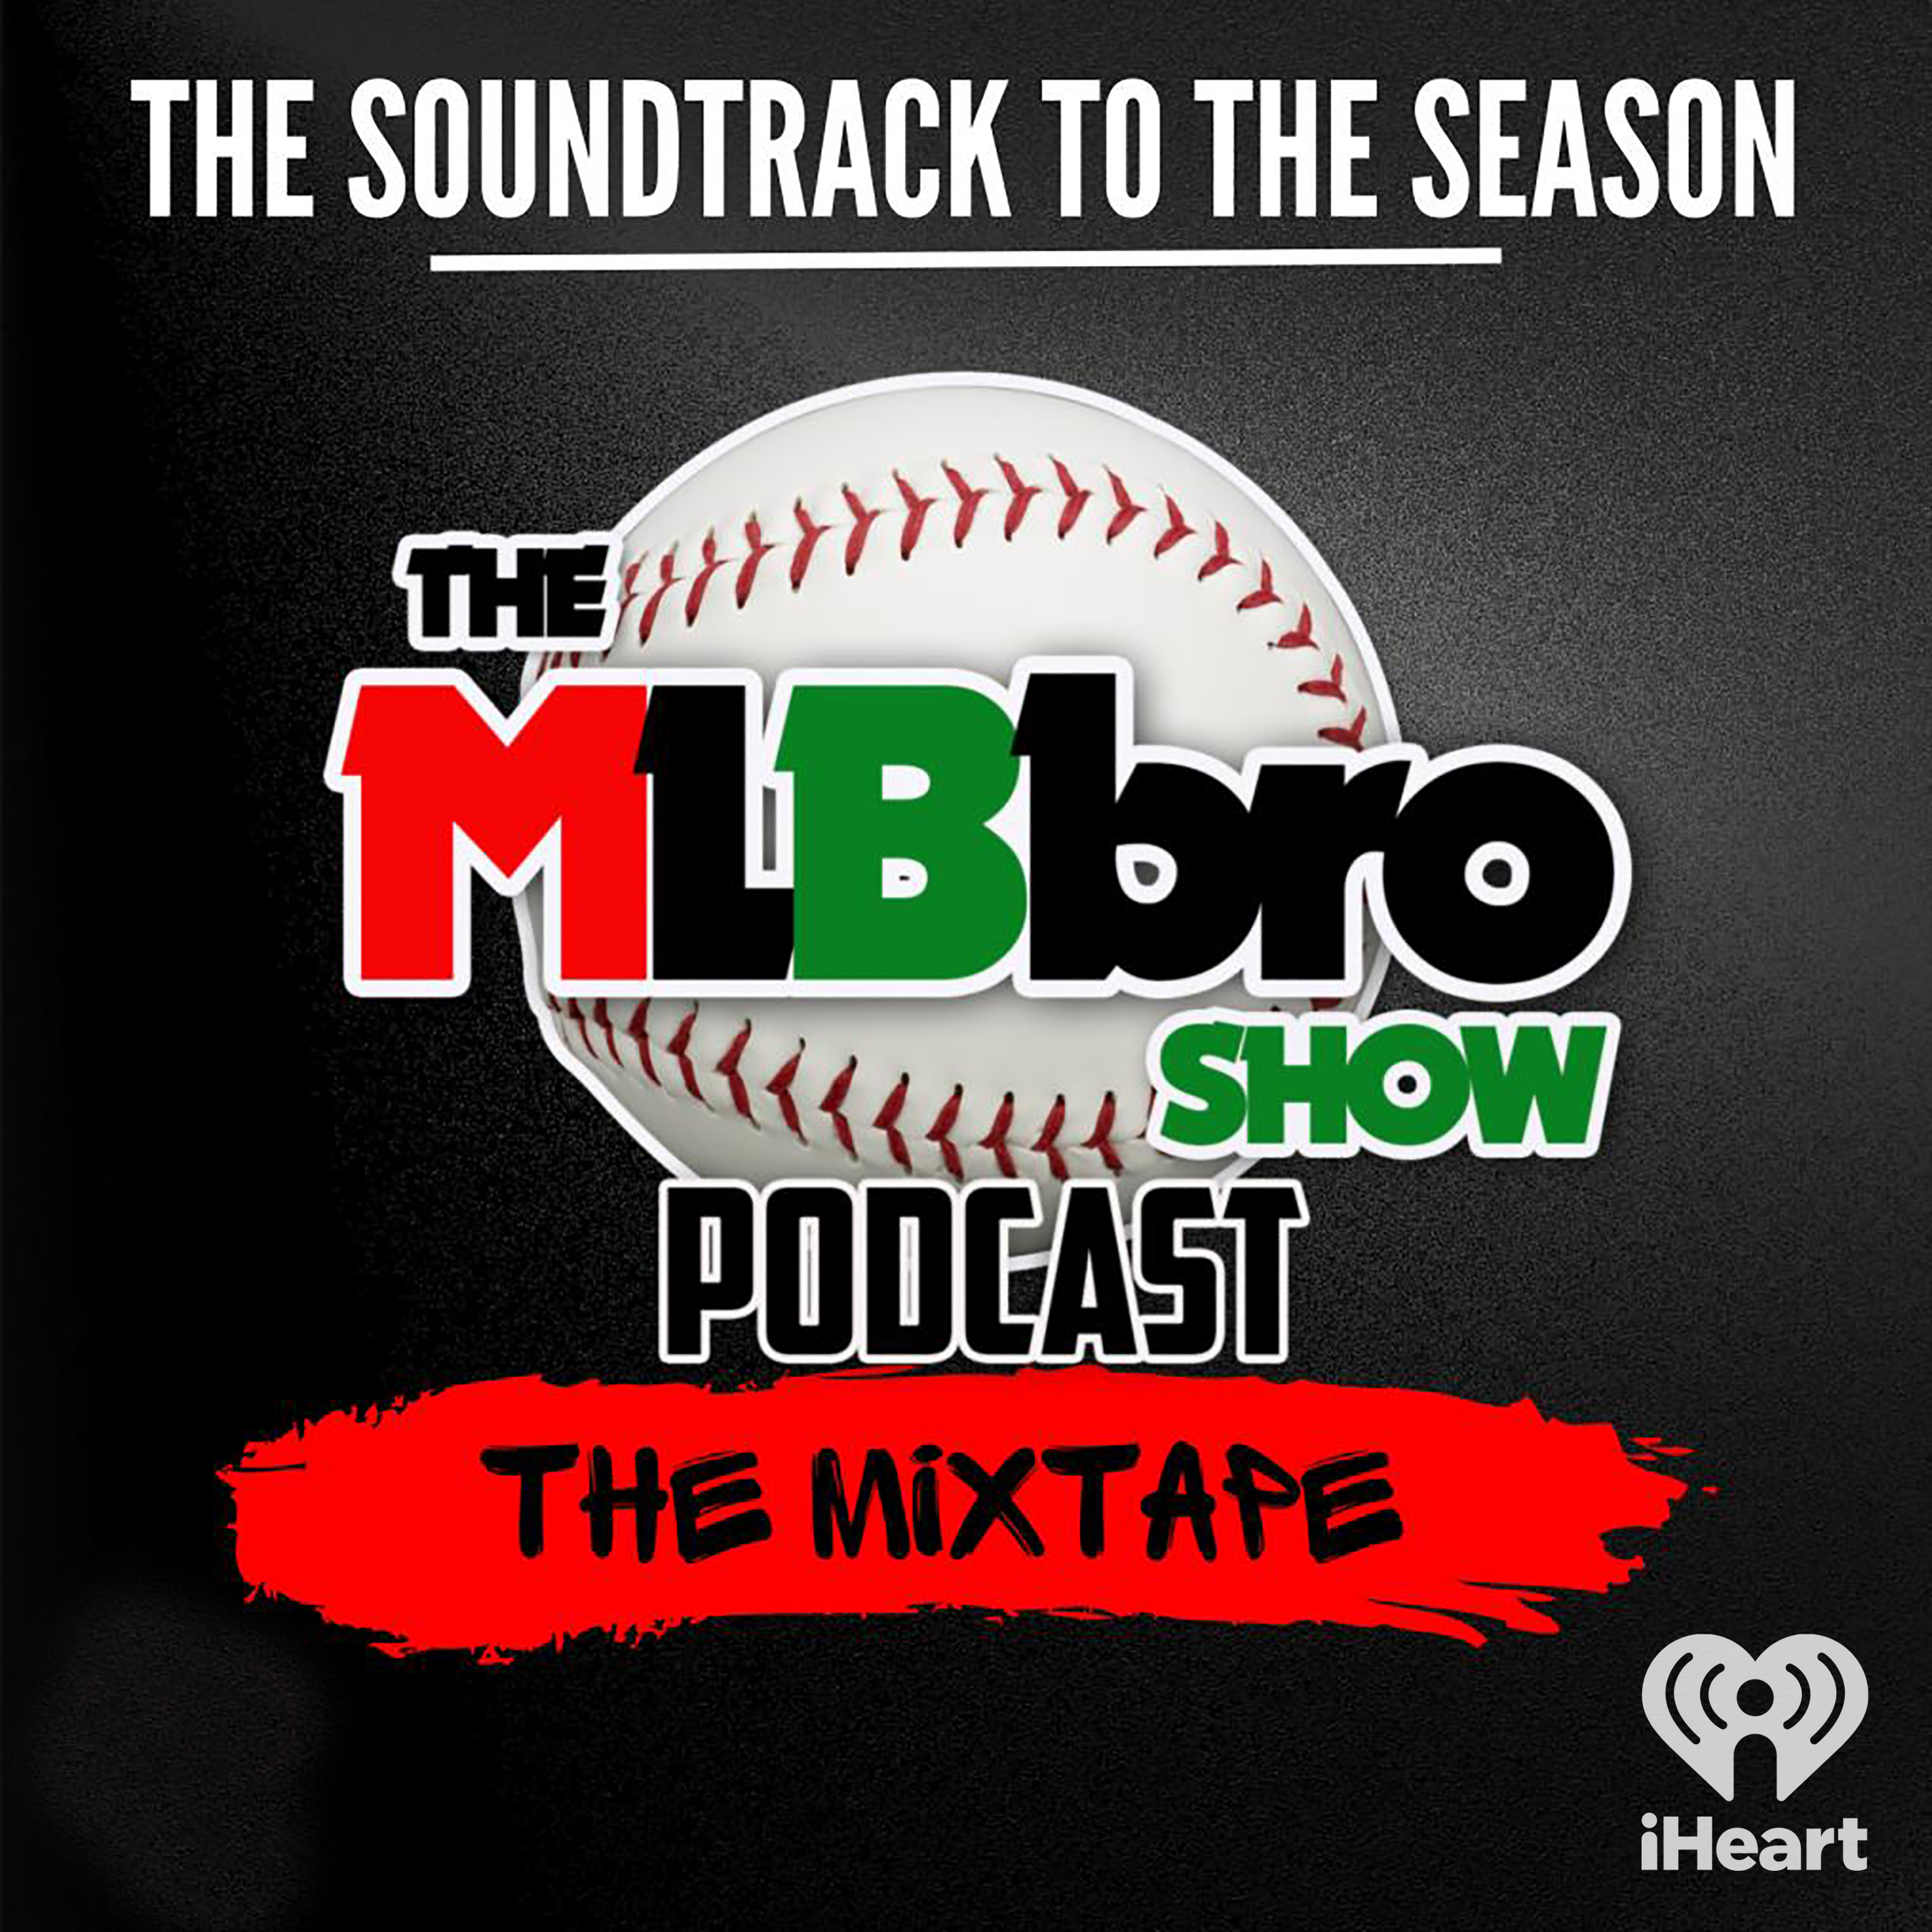 MLBbro Show Podcast The Mixtape Vol 3 Episode 26